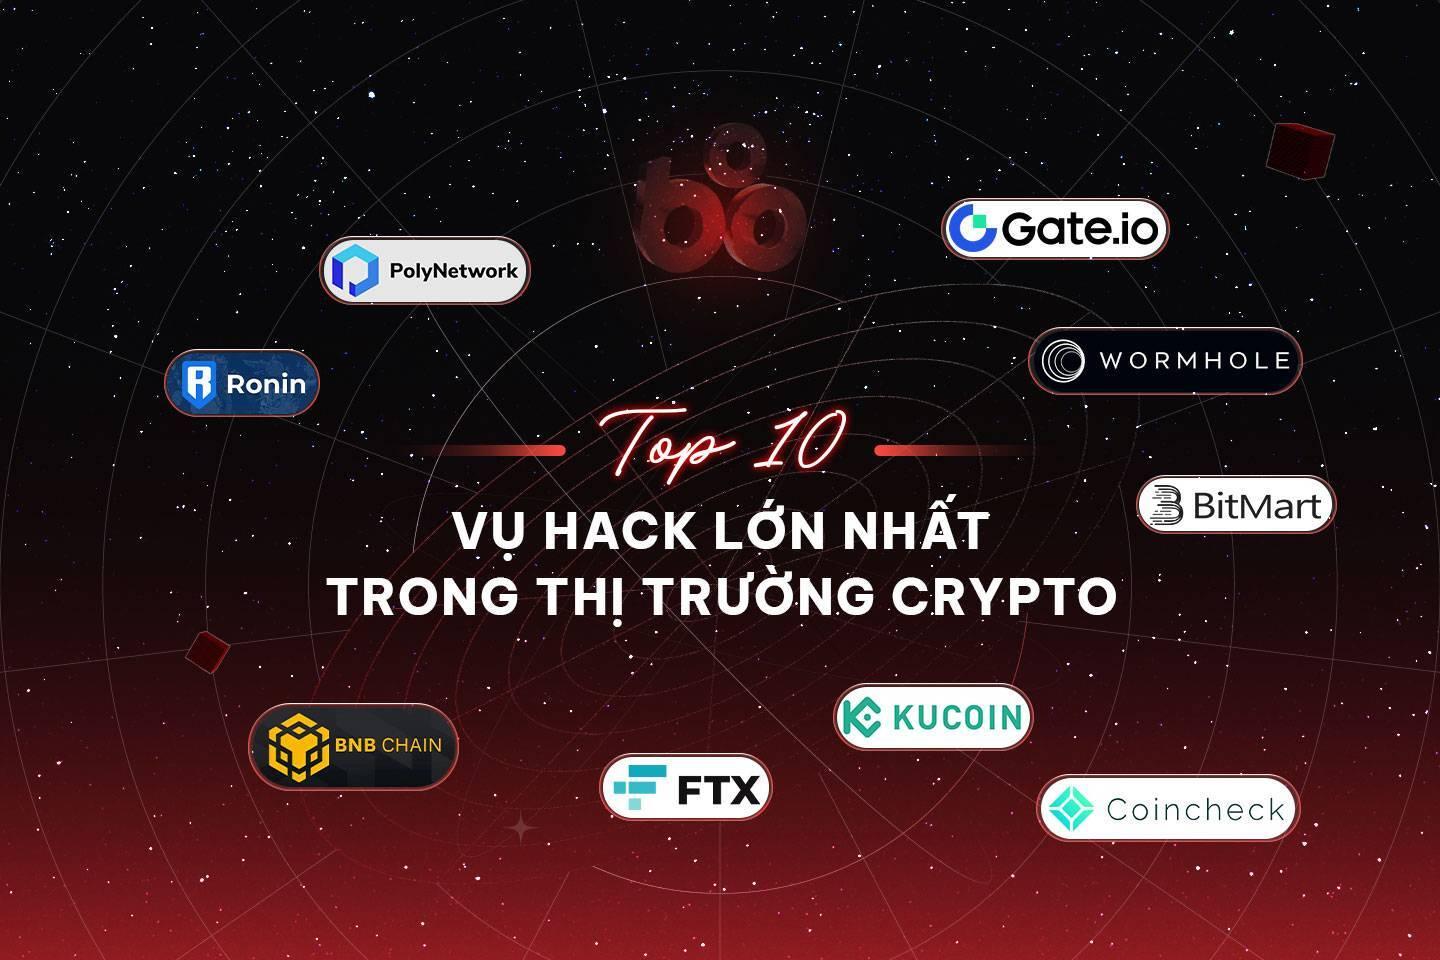 top-10-vu-hack-lon-nhat-lich-su-thi-truong-crypto